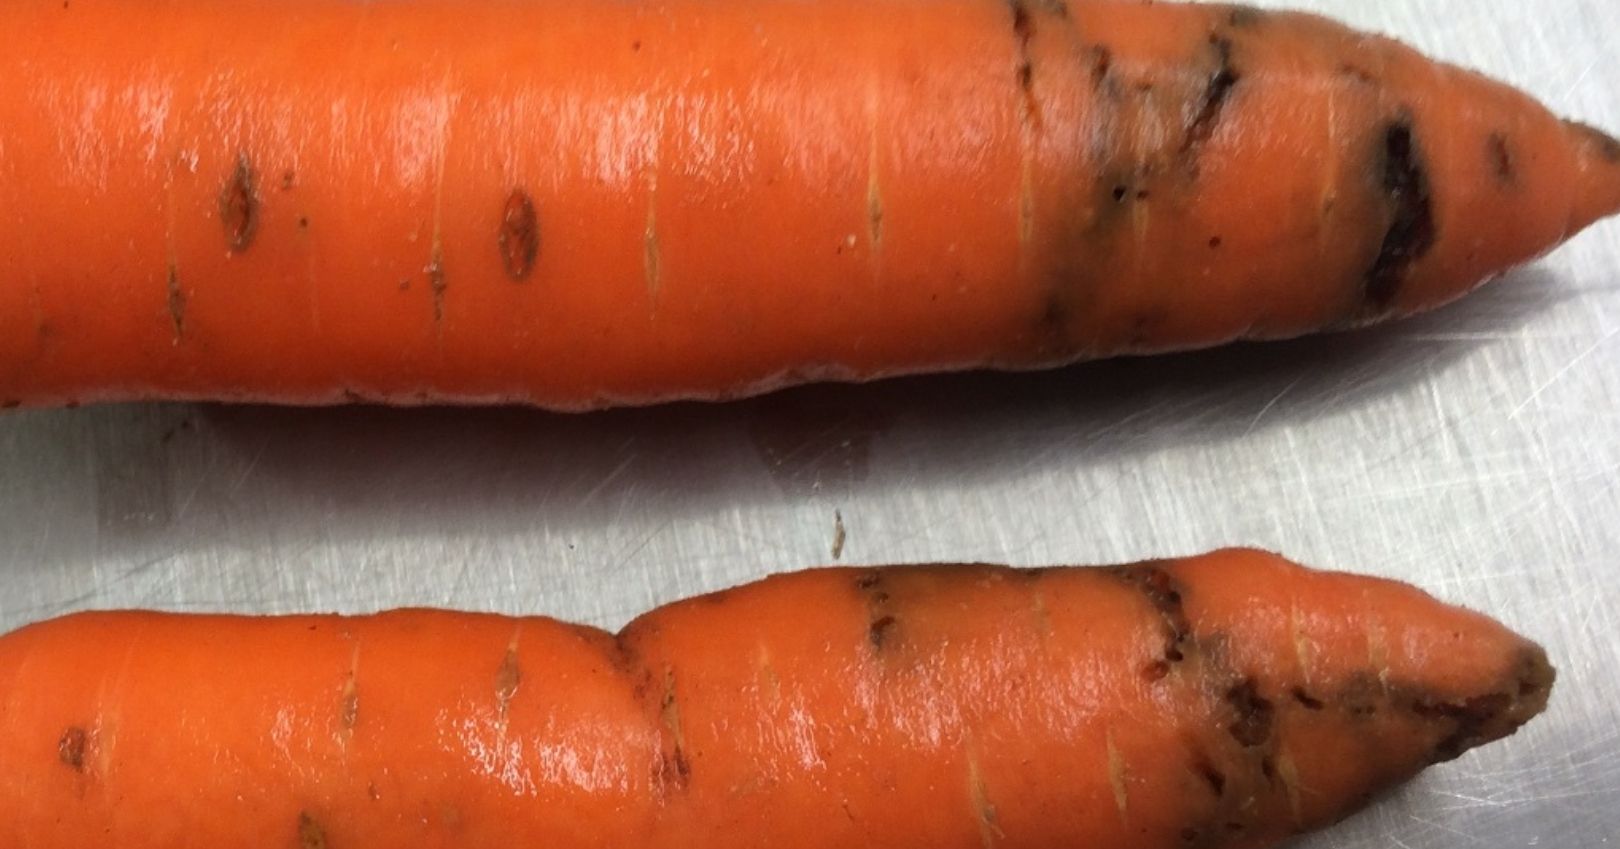 Cavity Spot in Carrots (Bayer)